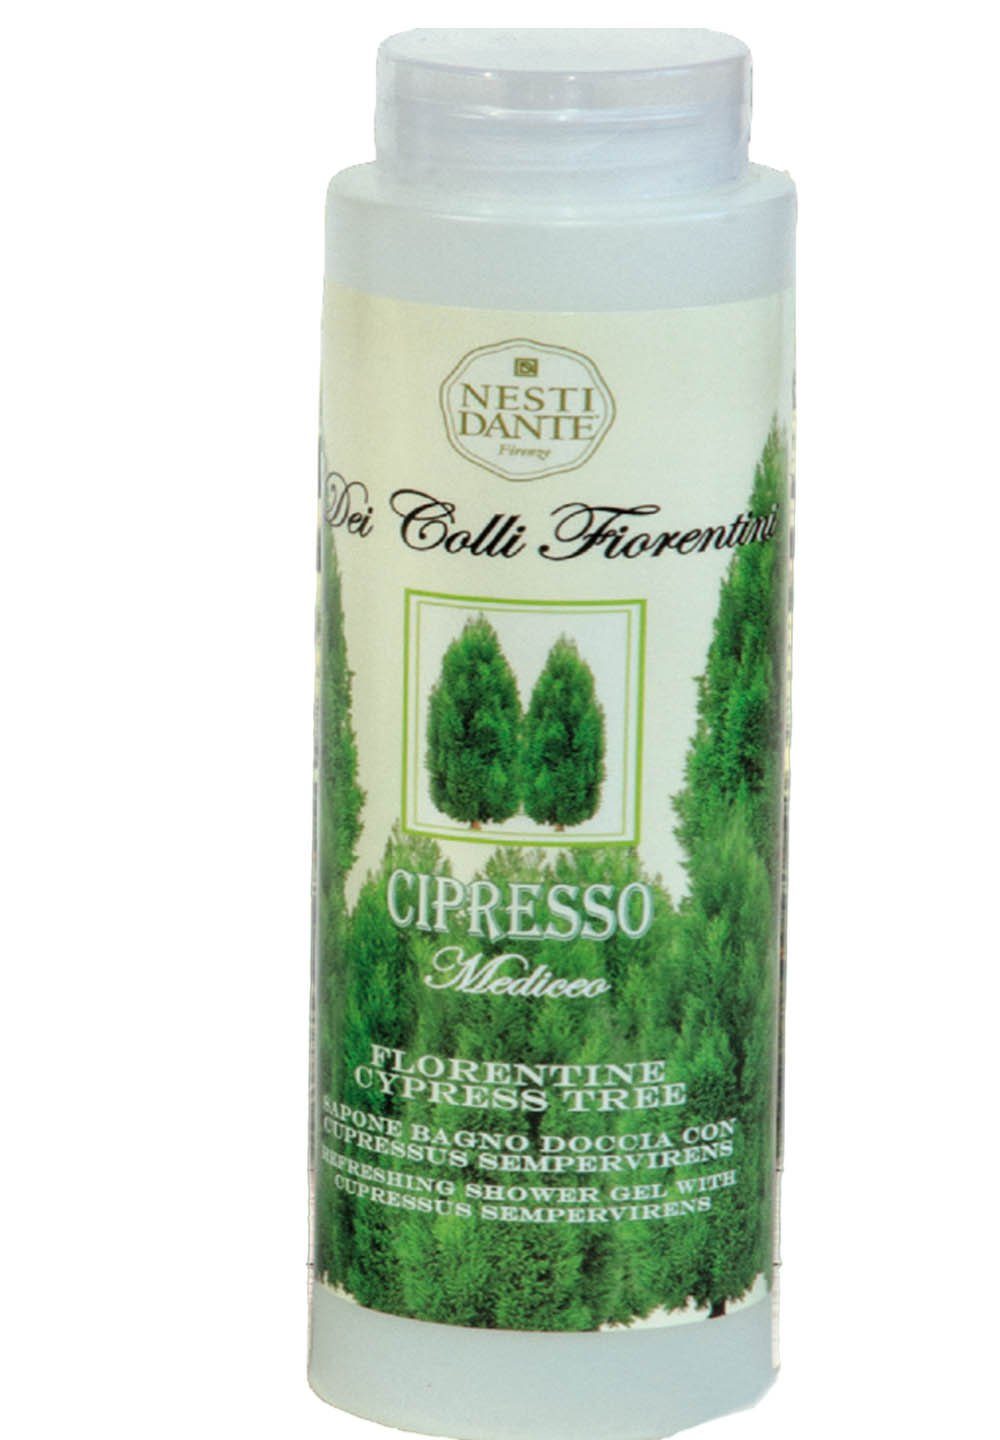 300 ml Fiorent. Duschgel Tree Dante Cypress Nesti